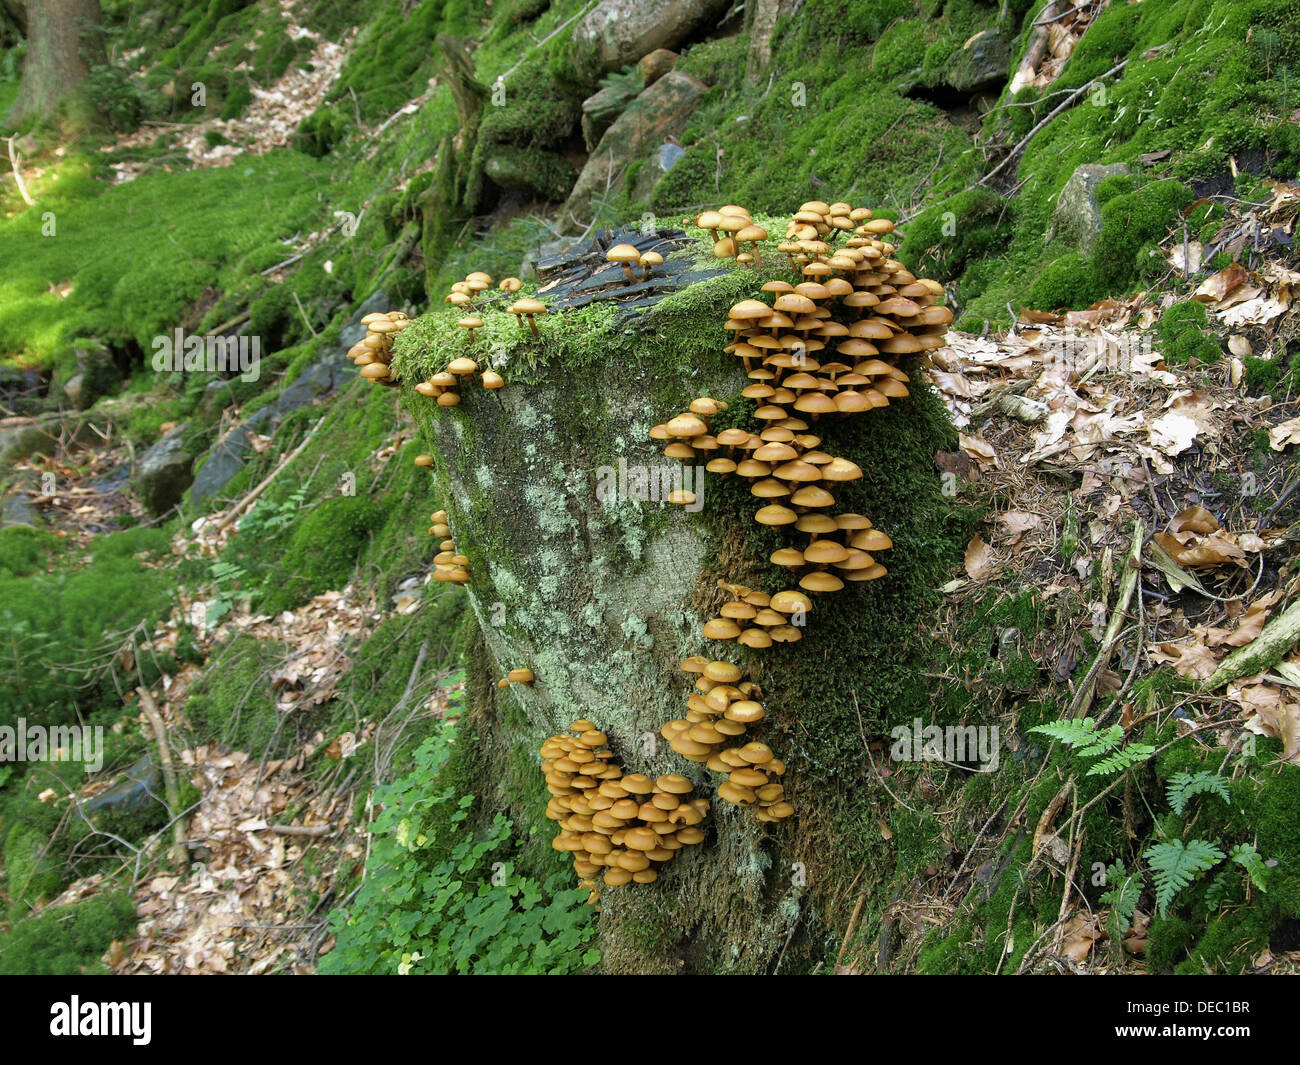 sheathed woodtuft / Kuehneromyces mutabilis / Gemeine Stockschwämmchen Stock Photo